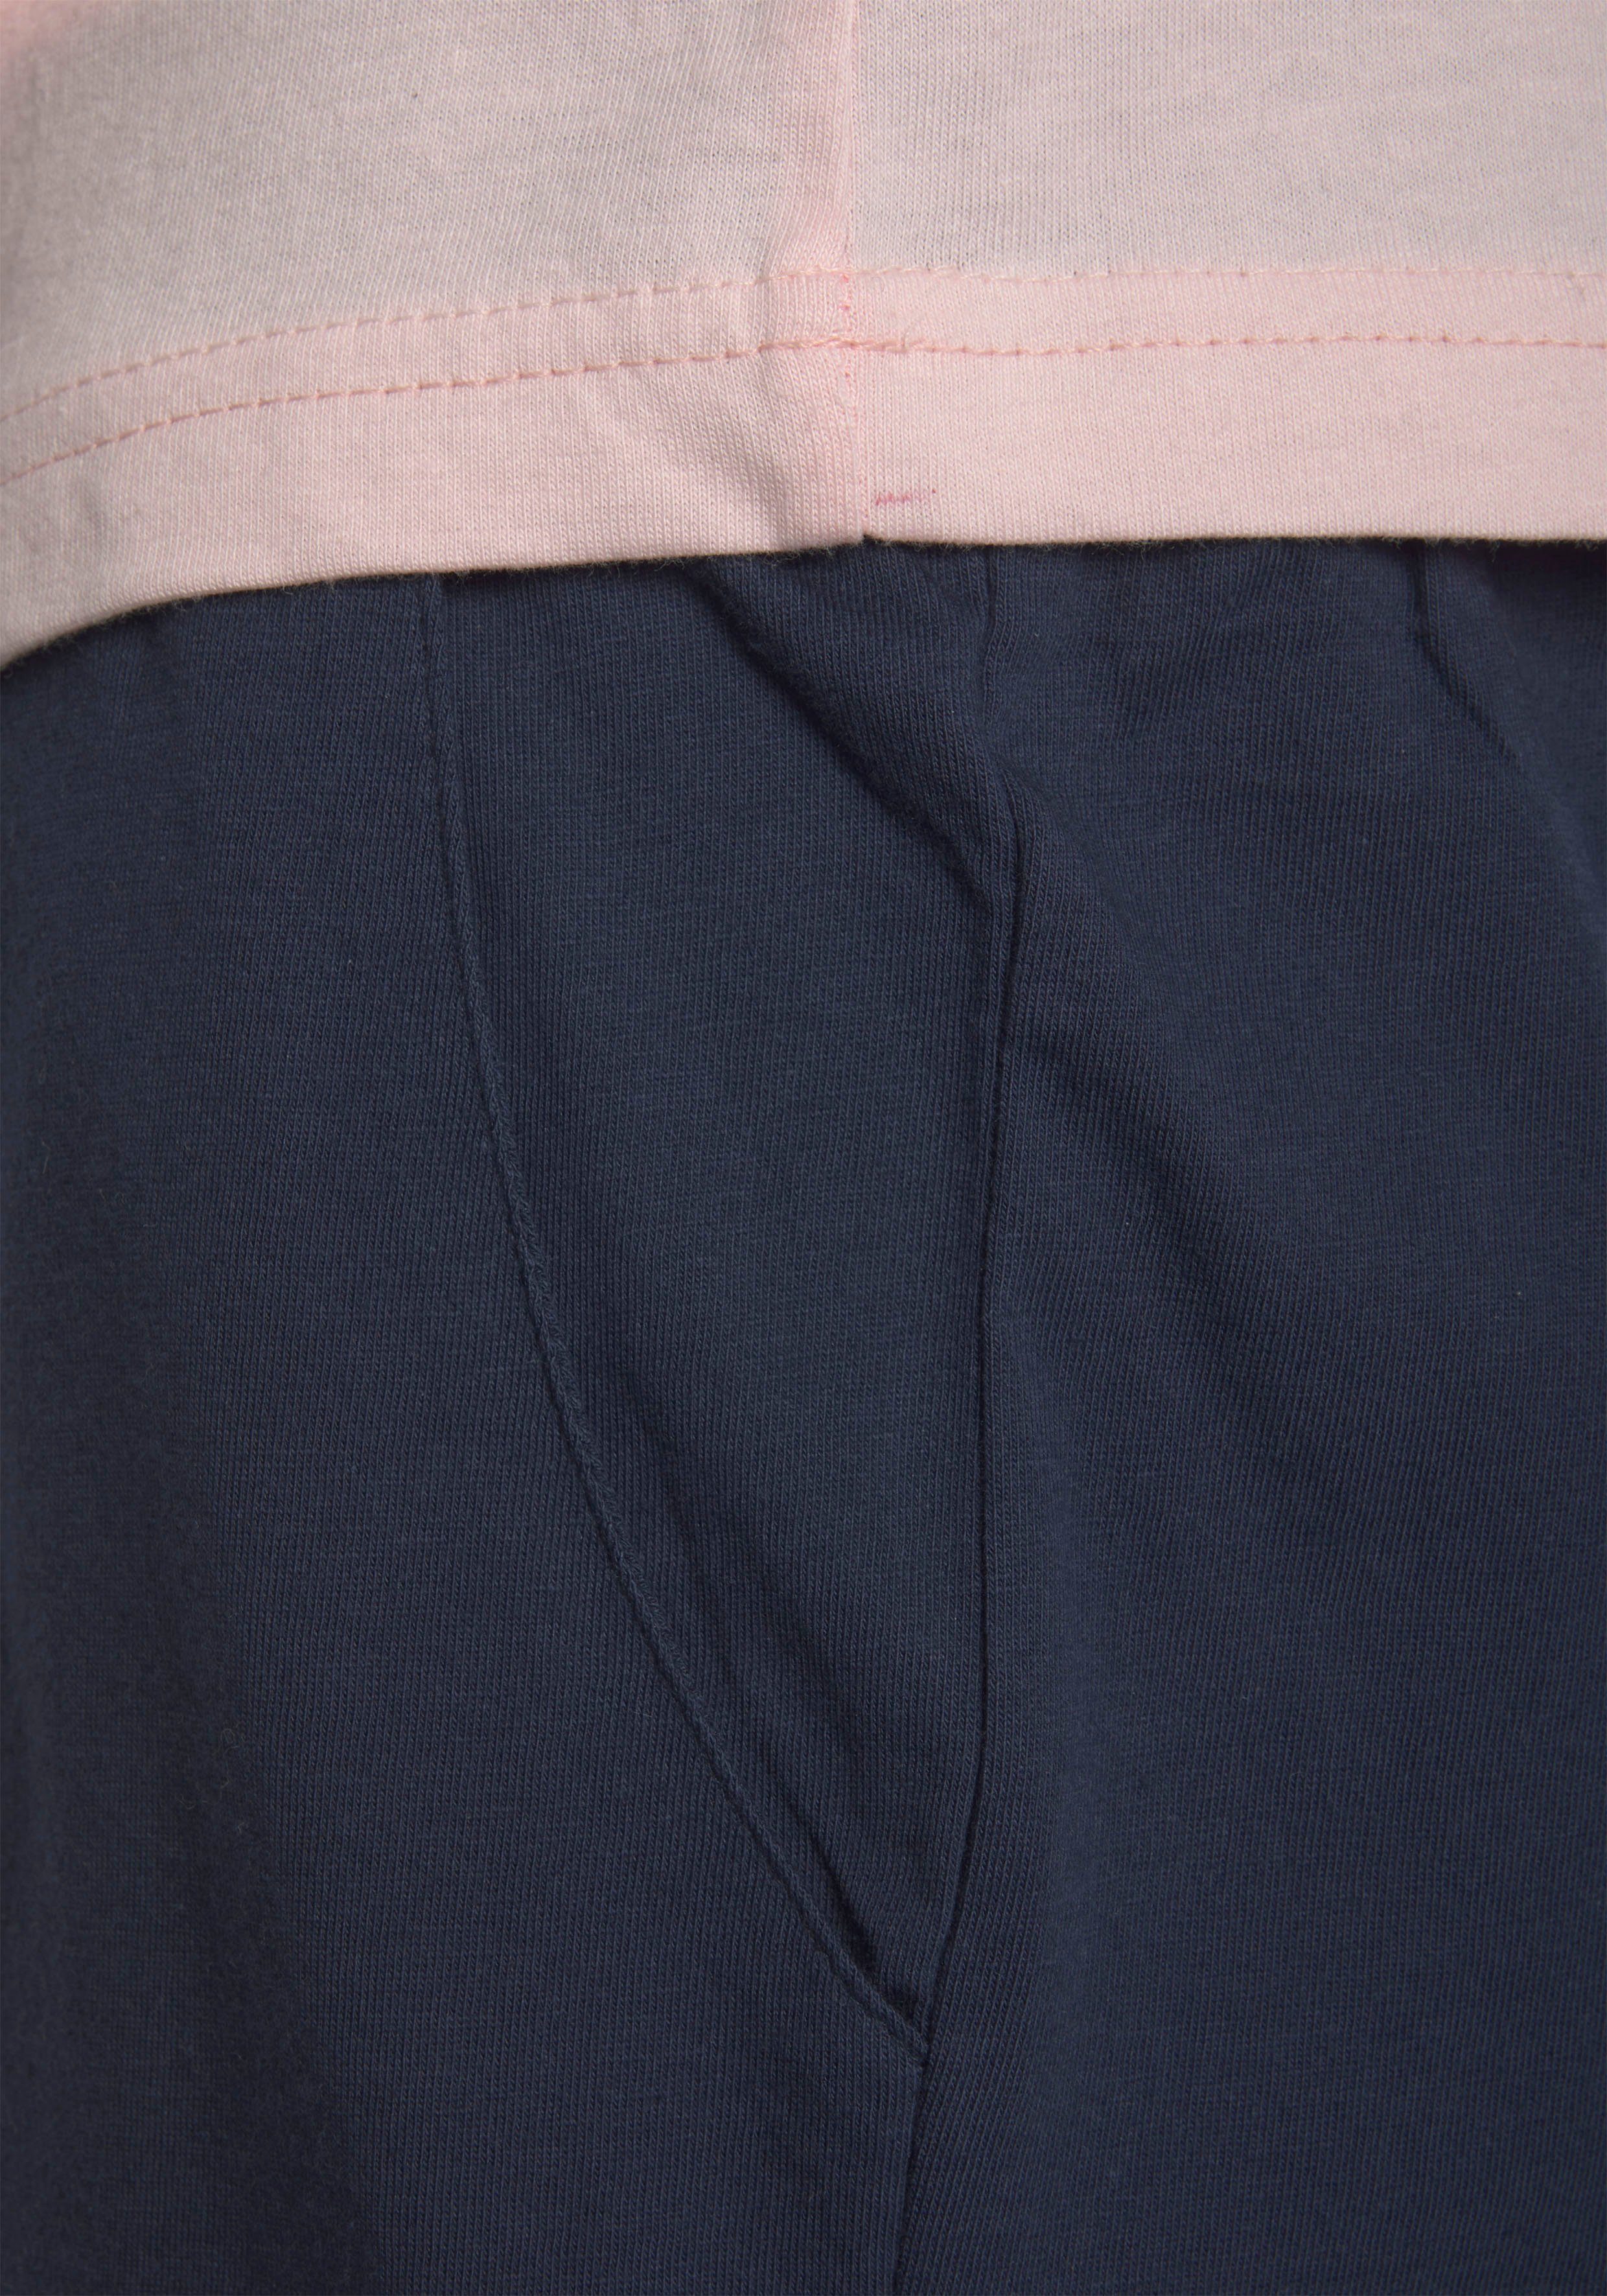 Shorty Stück) rosa-dunkelblau kontrastfarbenen tlg., (2 KangaROOS mit 1 Raglanärmeln